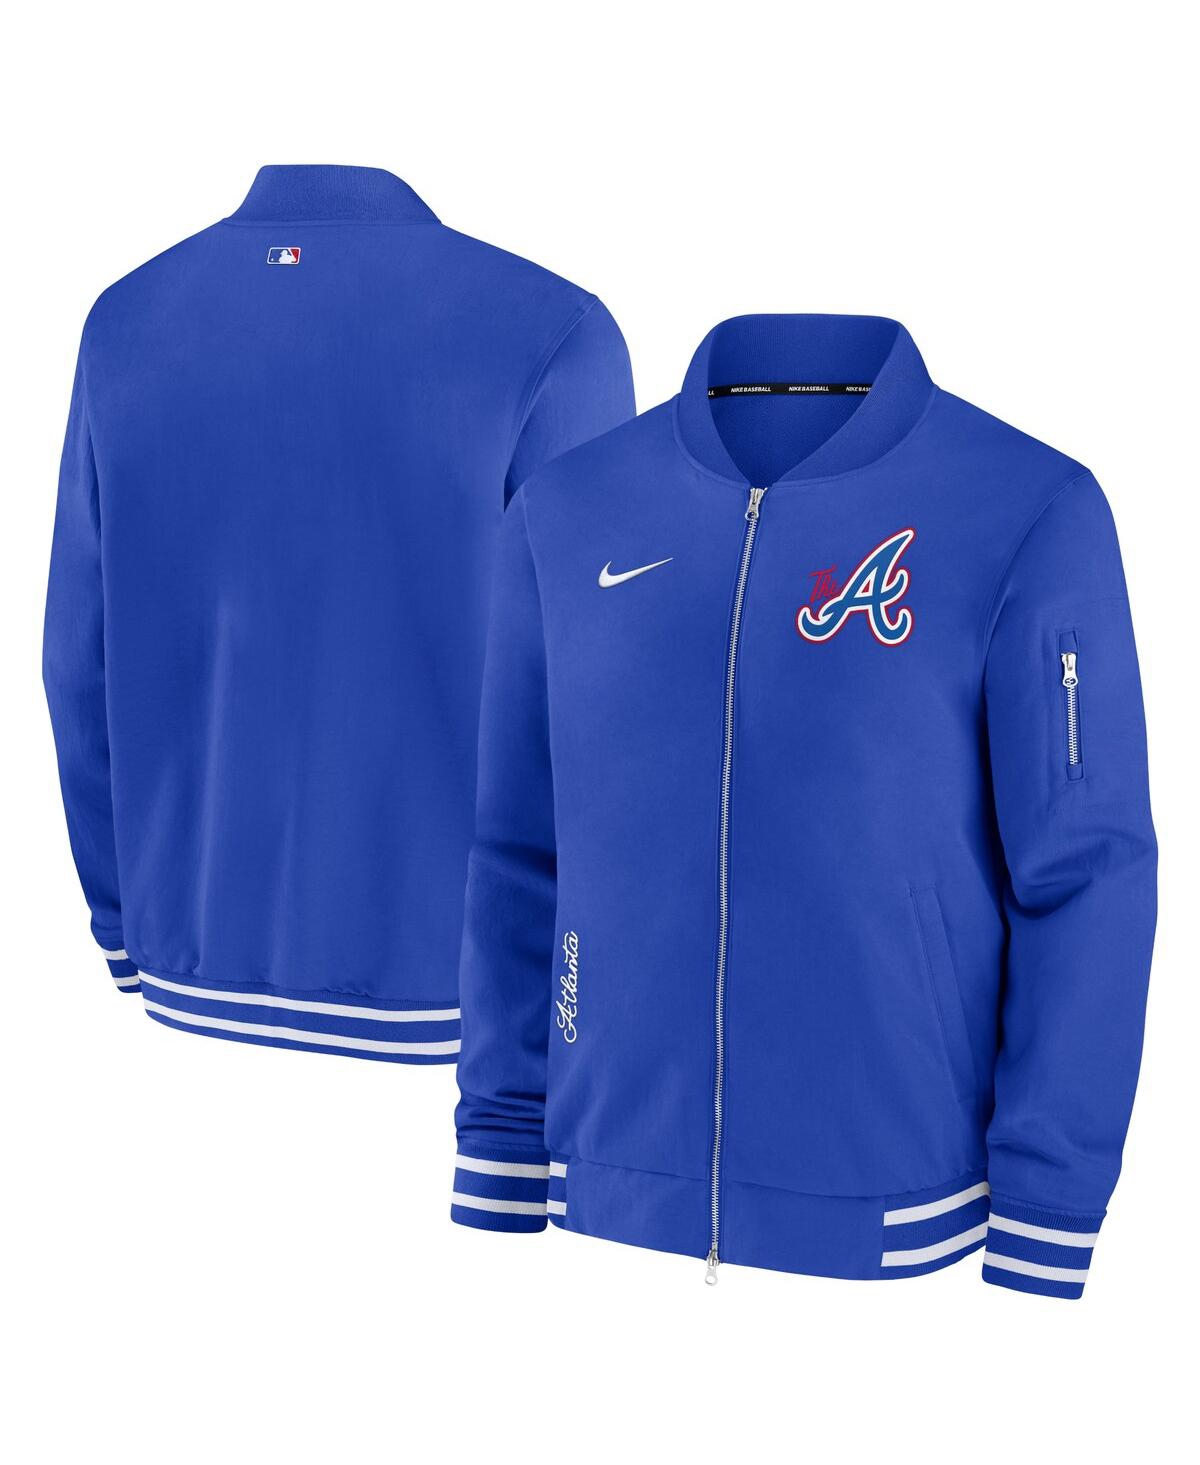 Men's Nike Royal Atlanta Braves Authentic Collection Game Time Bomber Full-Zip Jacket - Royal